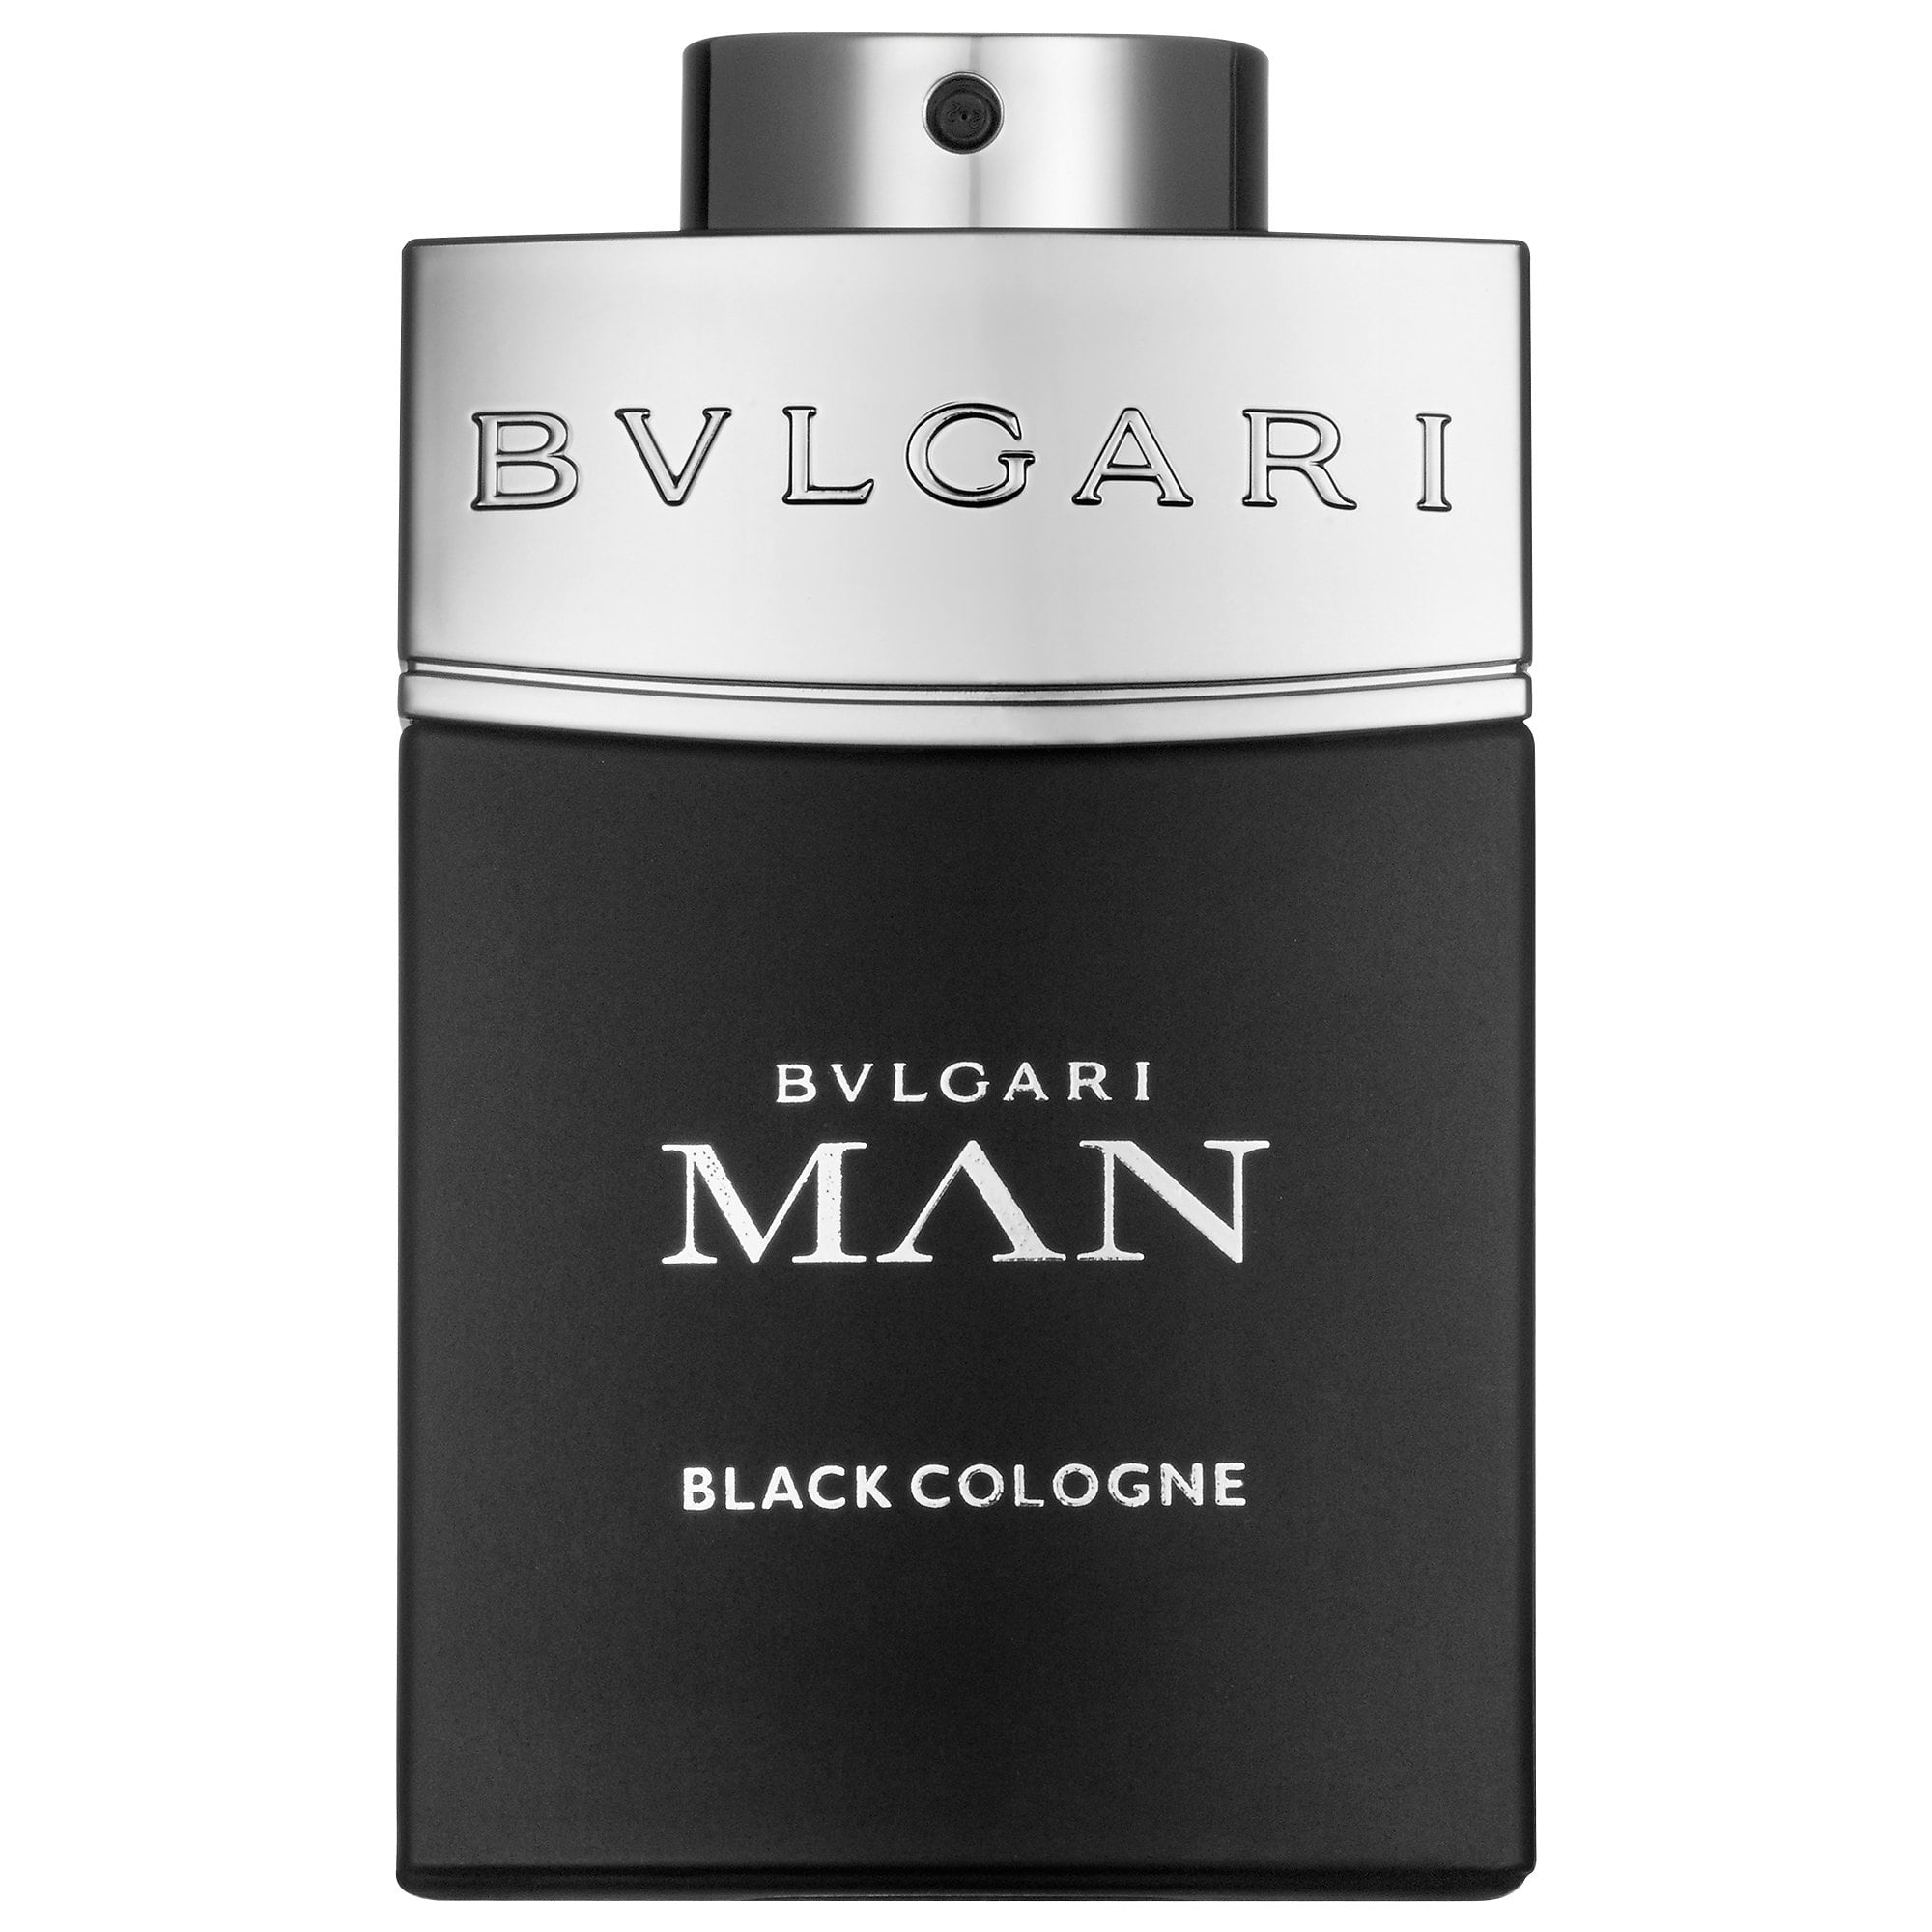 bvlgari men's cologne black